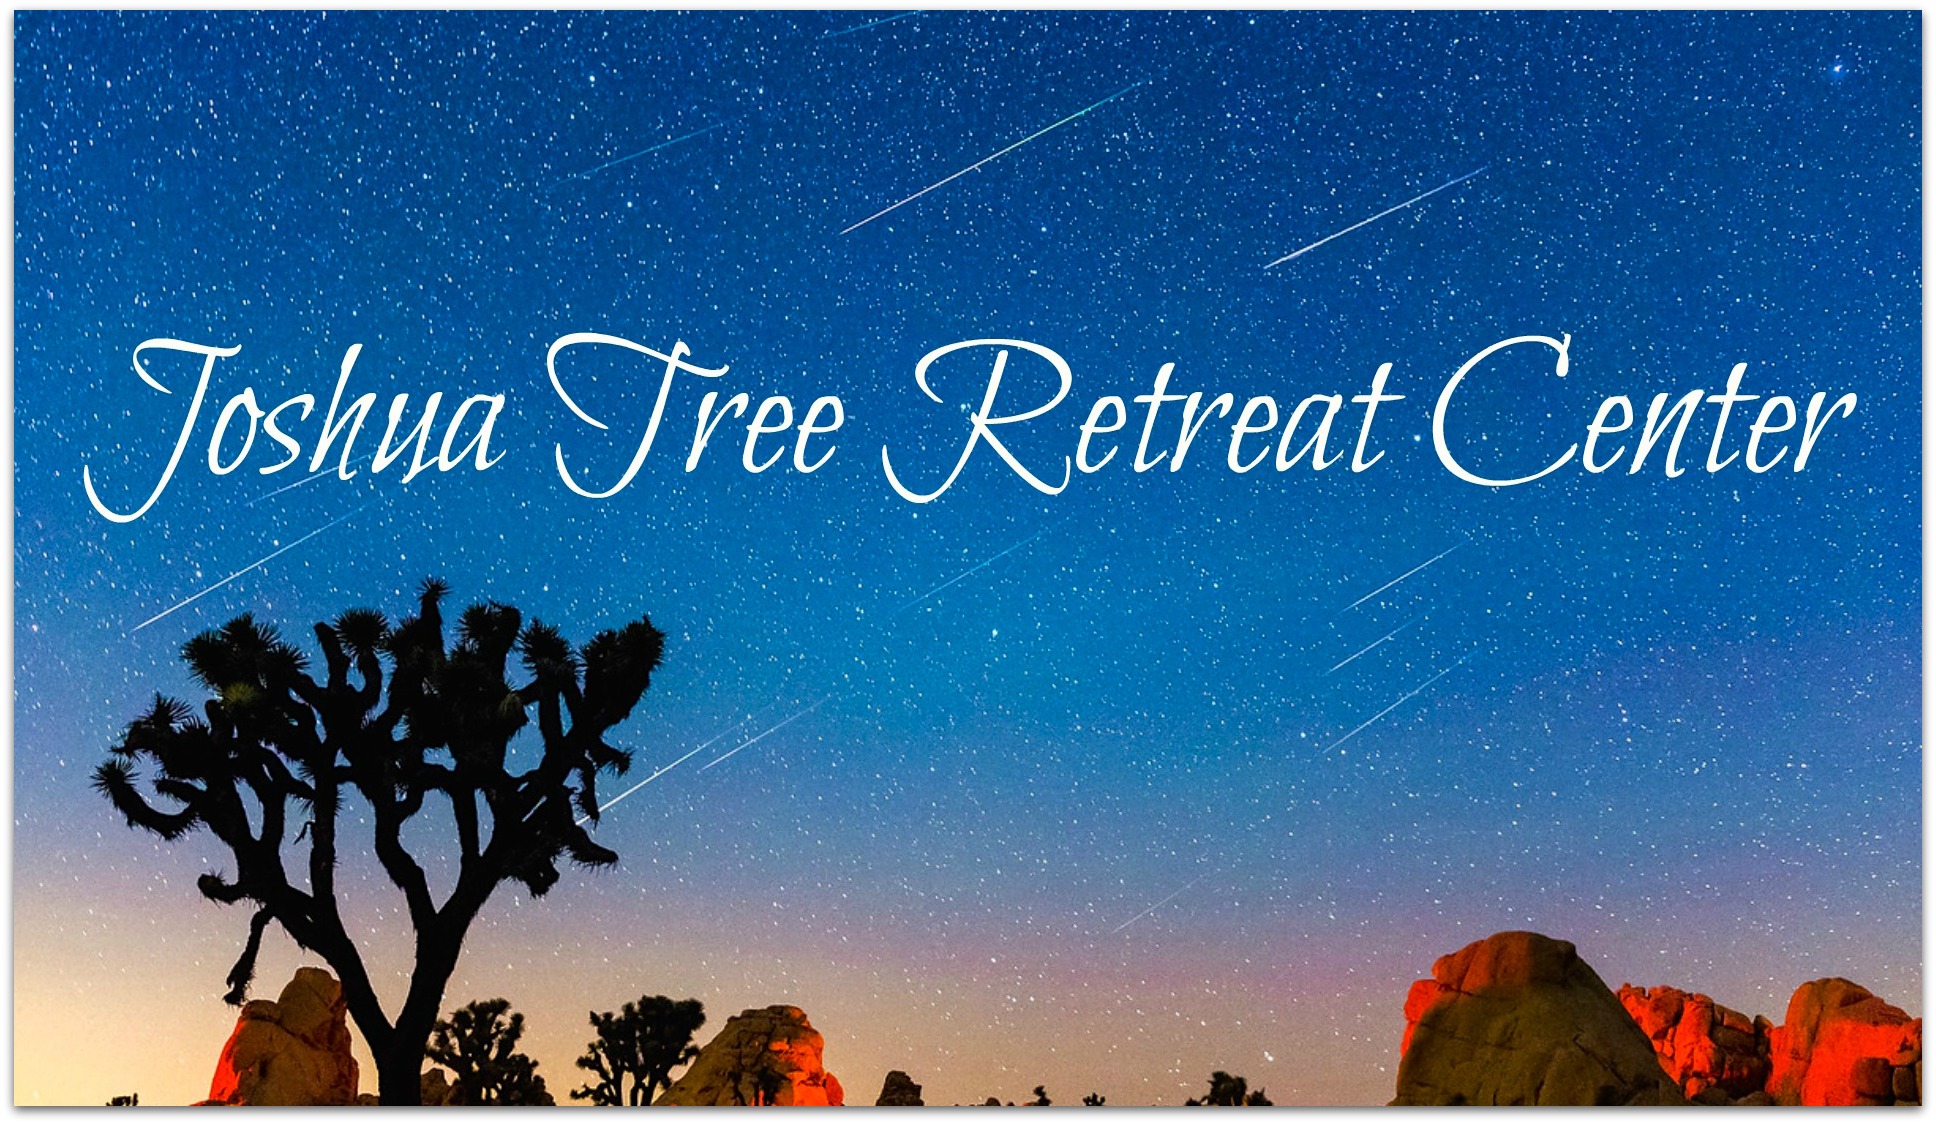 Joshua Tree Retreat Center United States